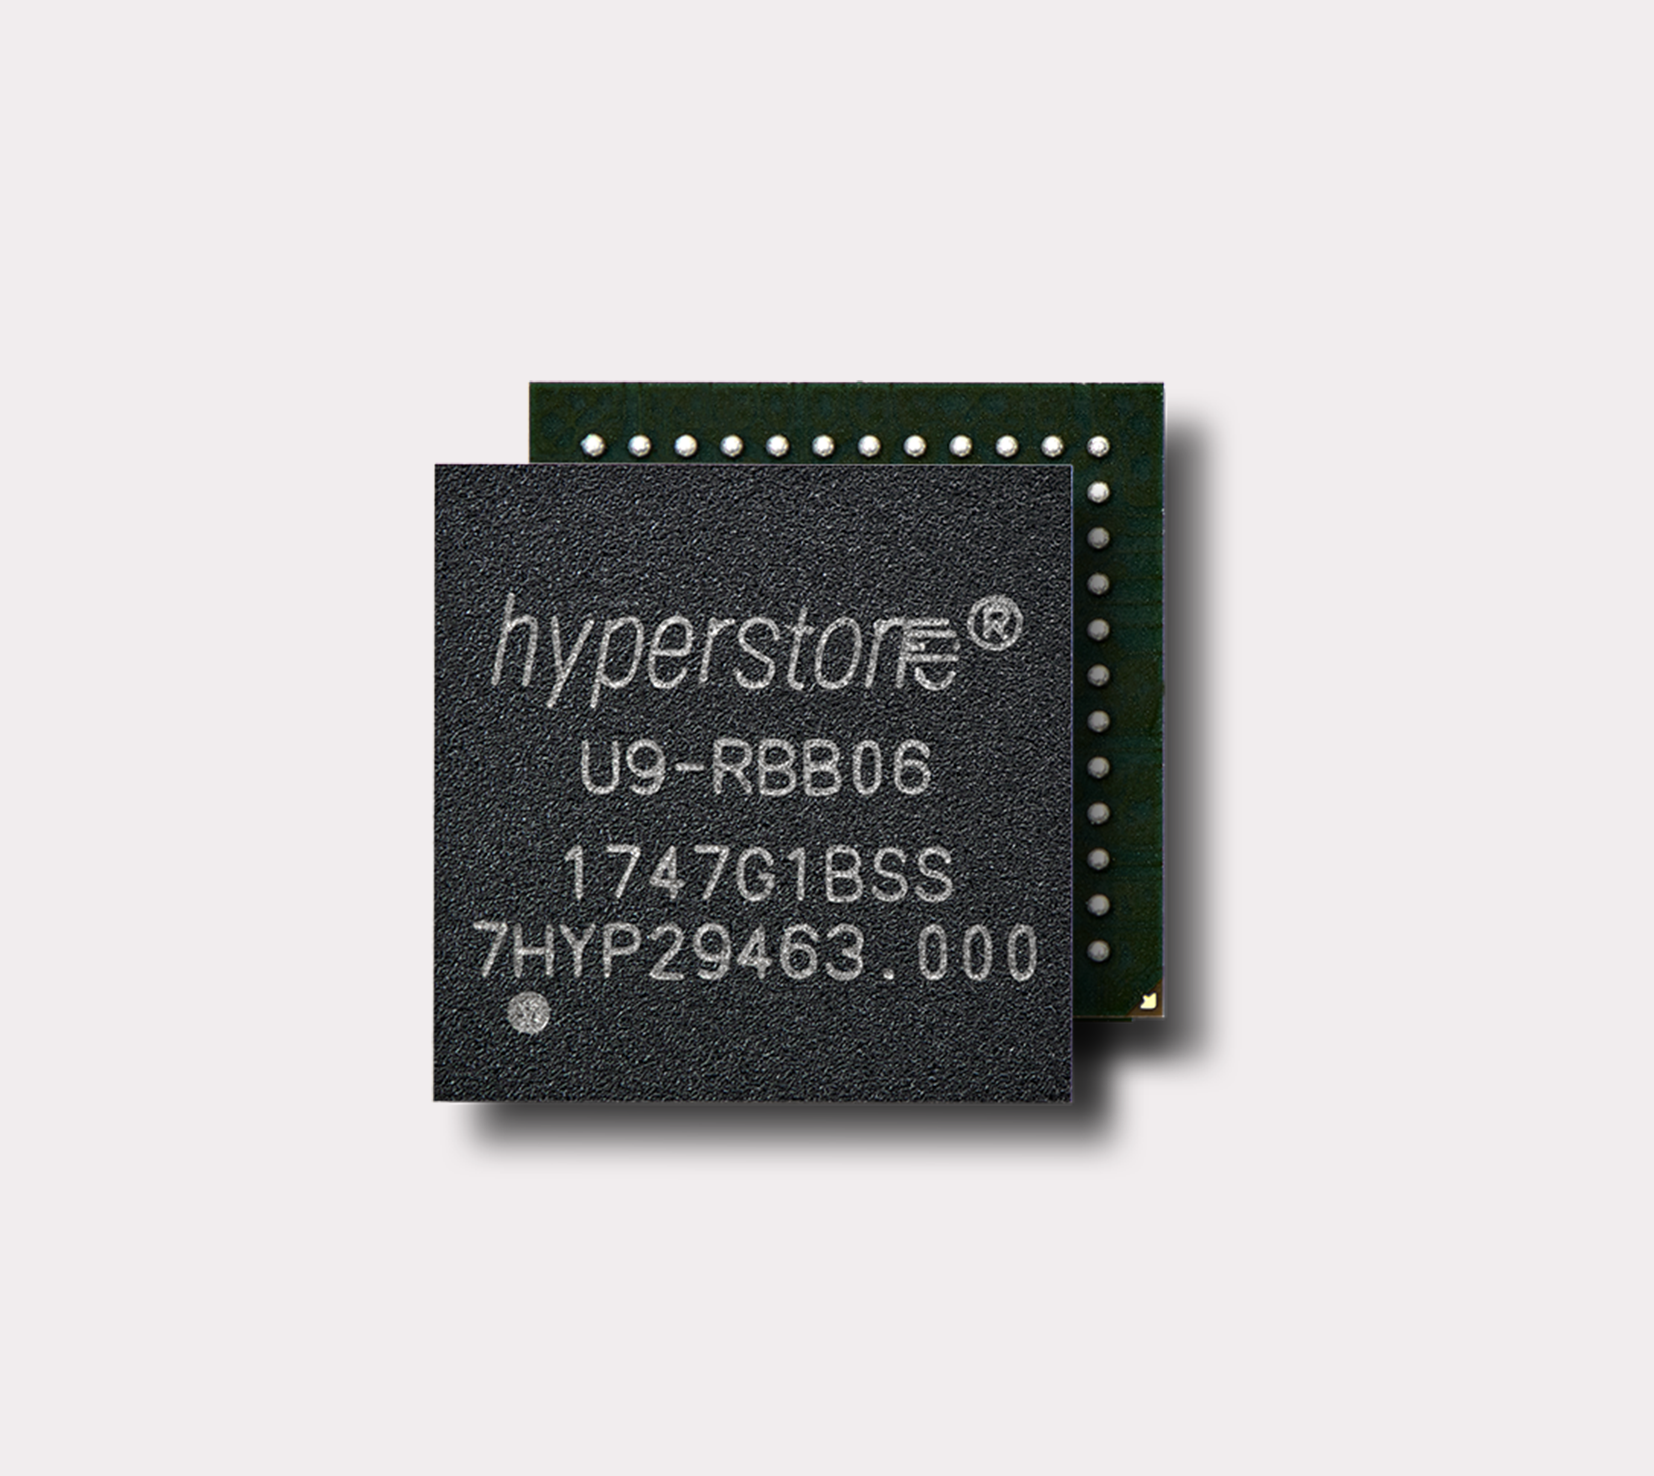 Hyperstone eUSB NAND Flash Memory Controller